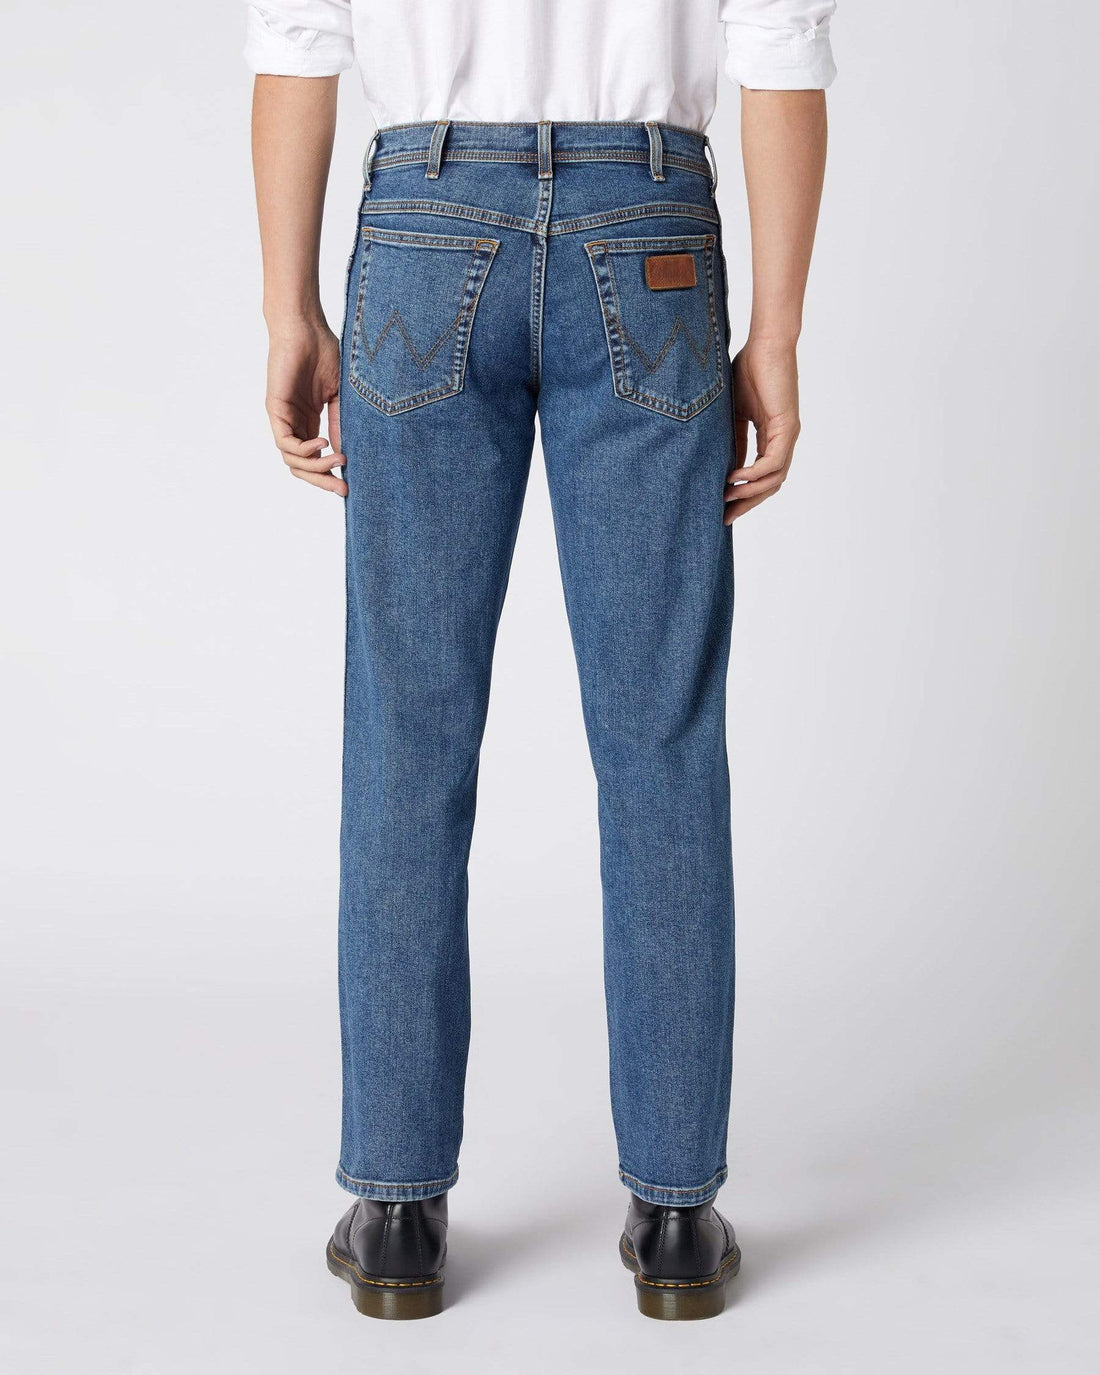 Wrangler Texas Stretch Original Fit Jeans - Stonewash Blue | JEANSTORE